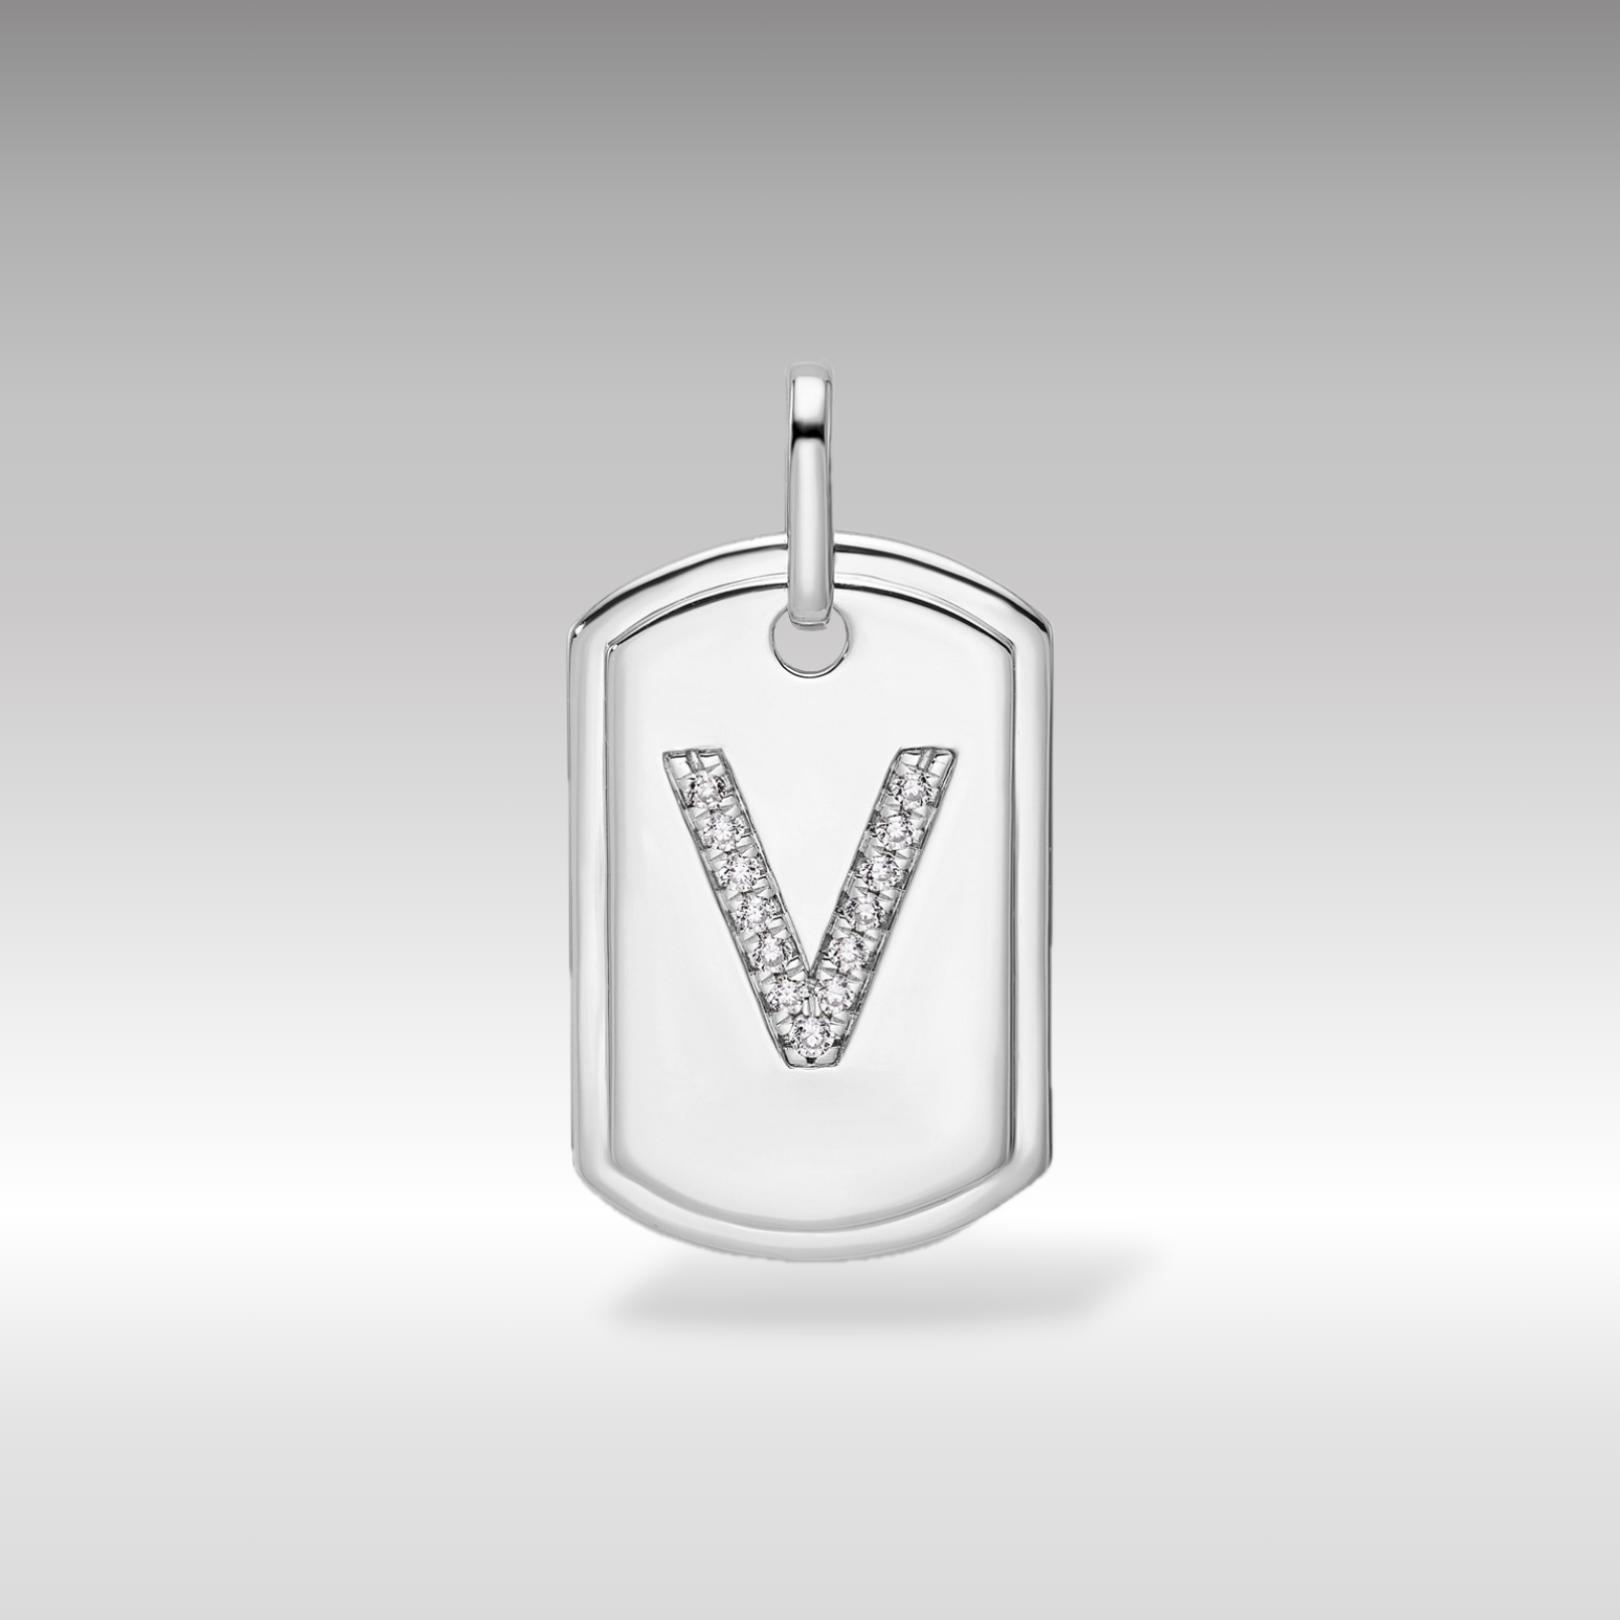 14K White Gold Initial "V" Dog Tag With Genuine Diamonds - Charlie & Co. Jewelry